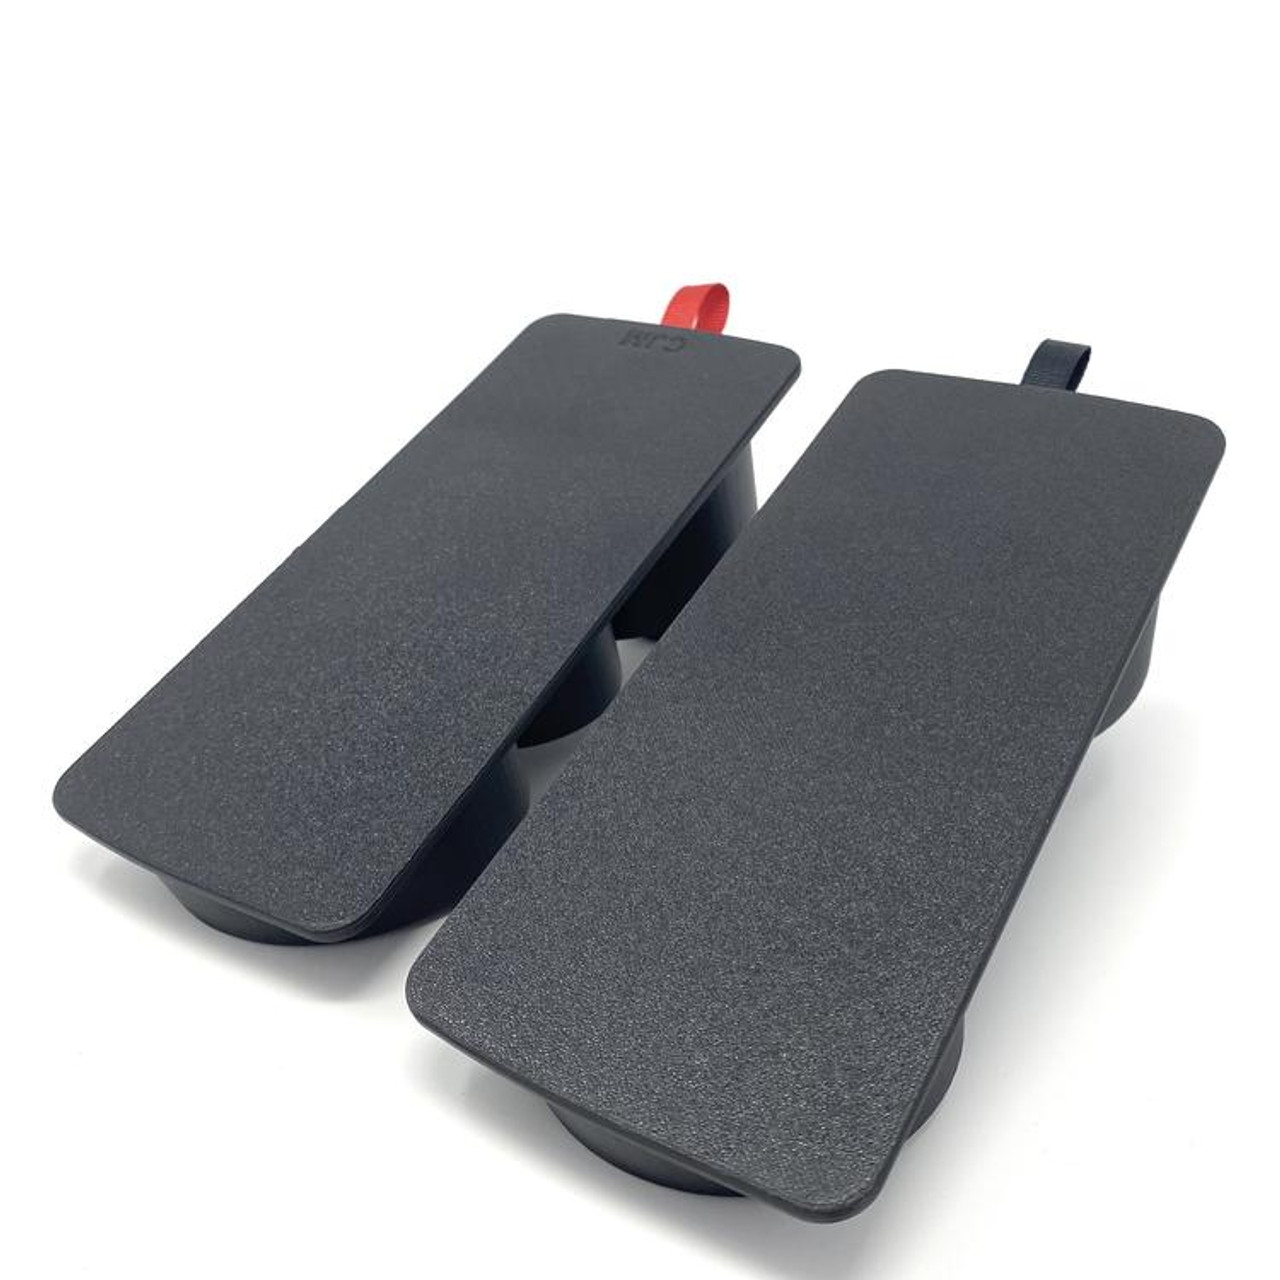 *Full Cover w/ Red Pull Tab (left) & Full Cover - No Branding w/ Black Pull Tab (right) shown*